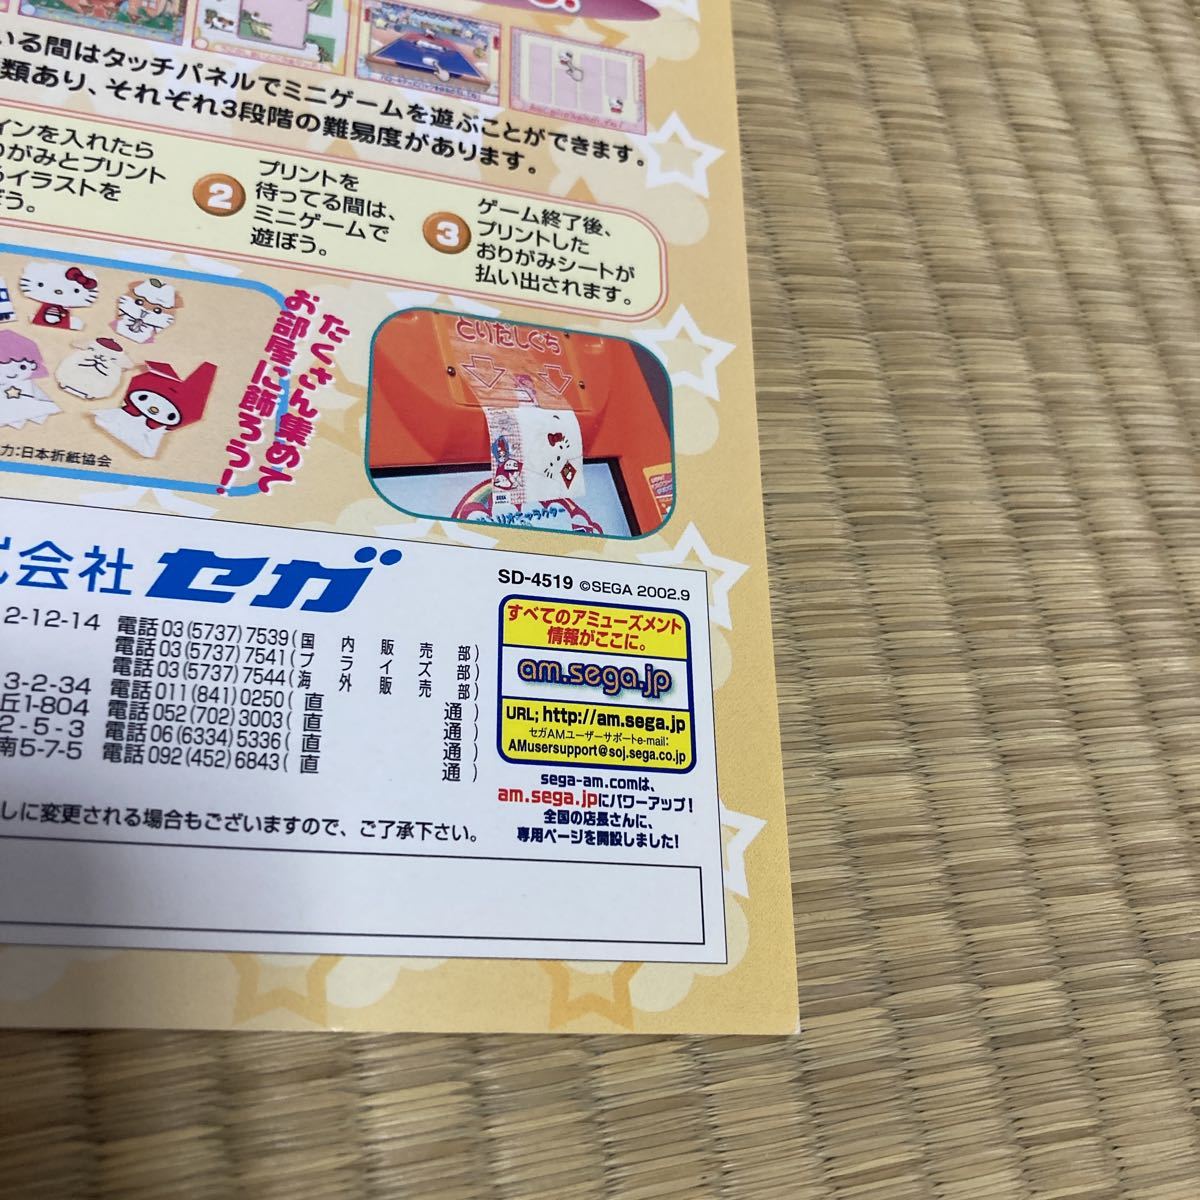  Touch de Kids Sanrio character SEGA arcade leaflet catalog Flyer pamphlet regular goods rare not for sale ..